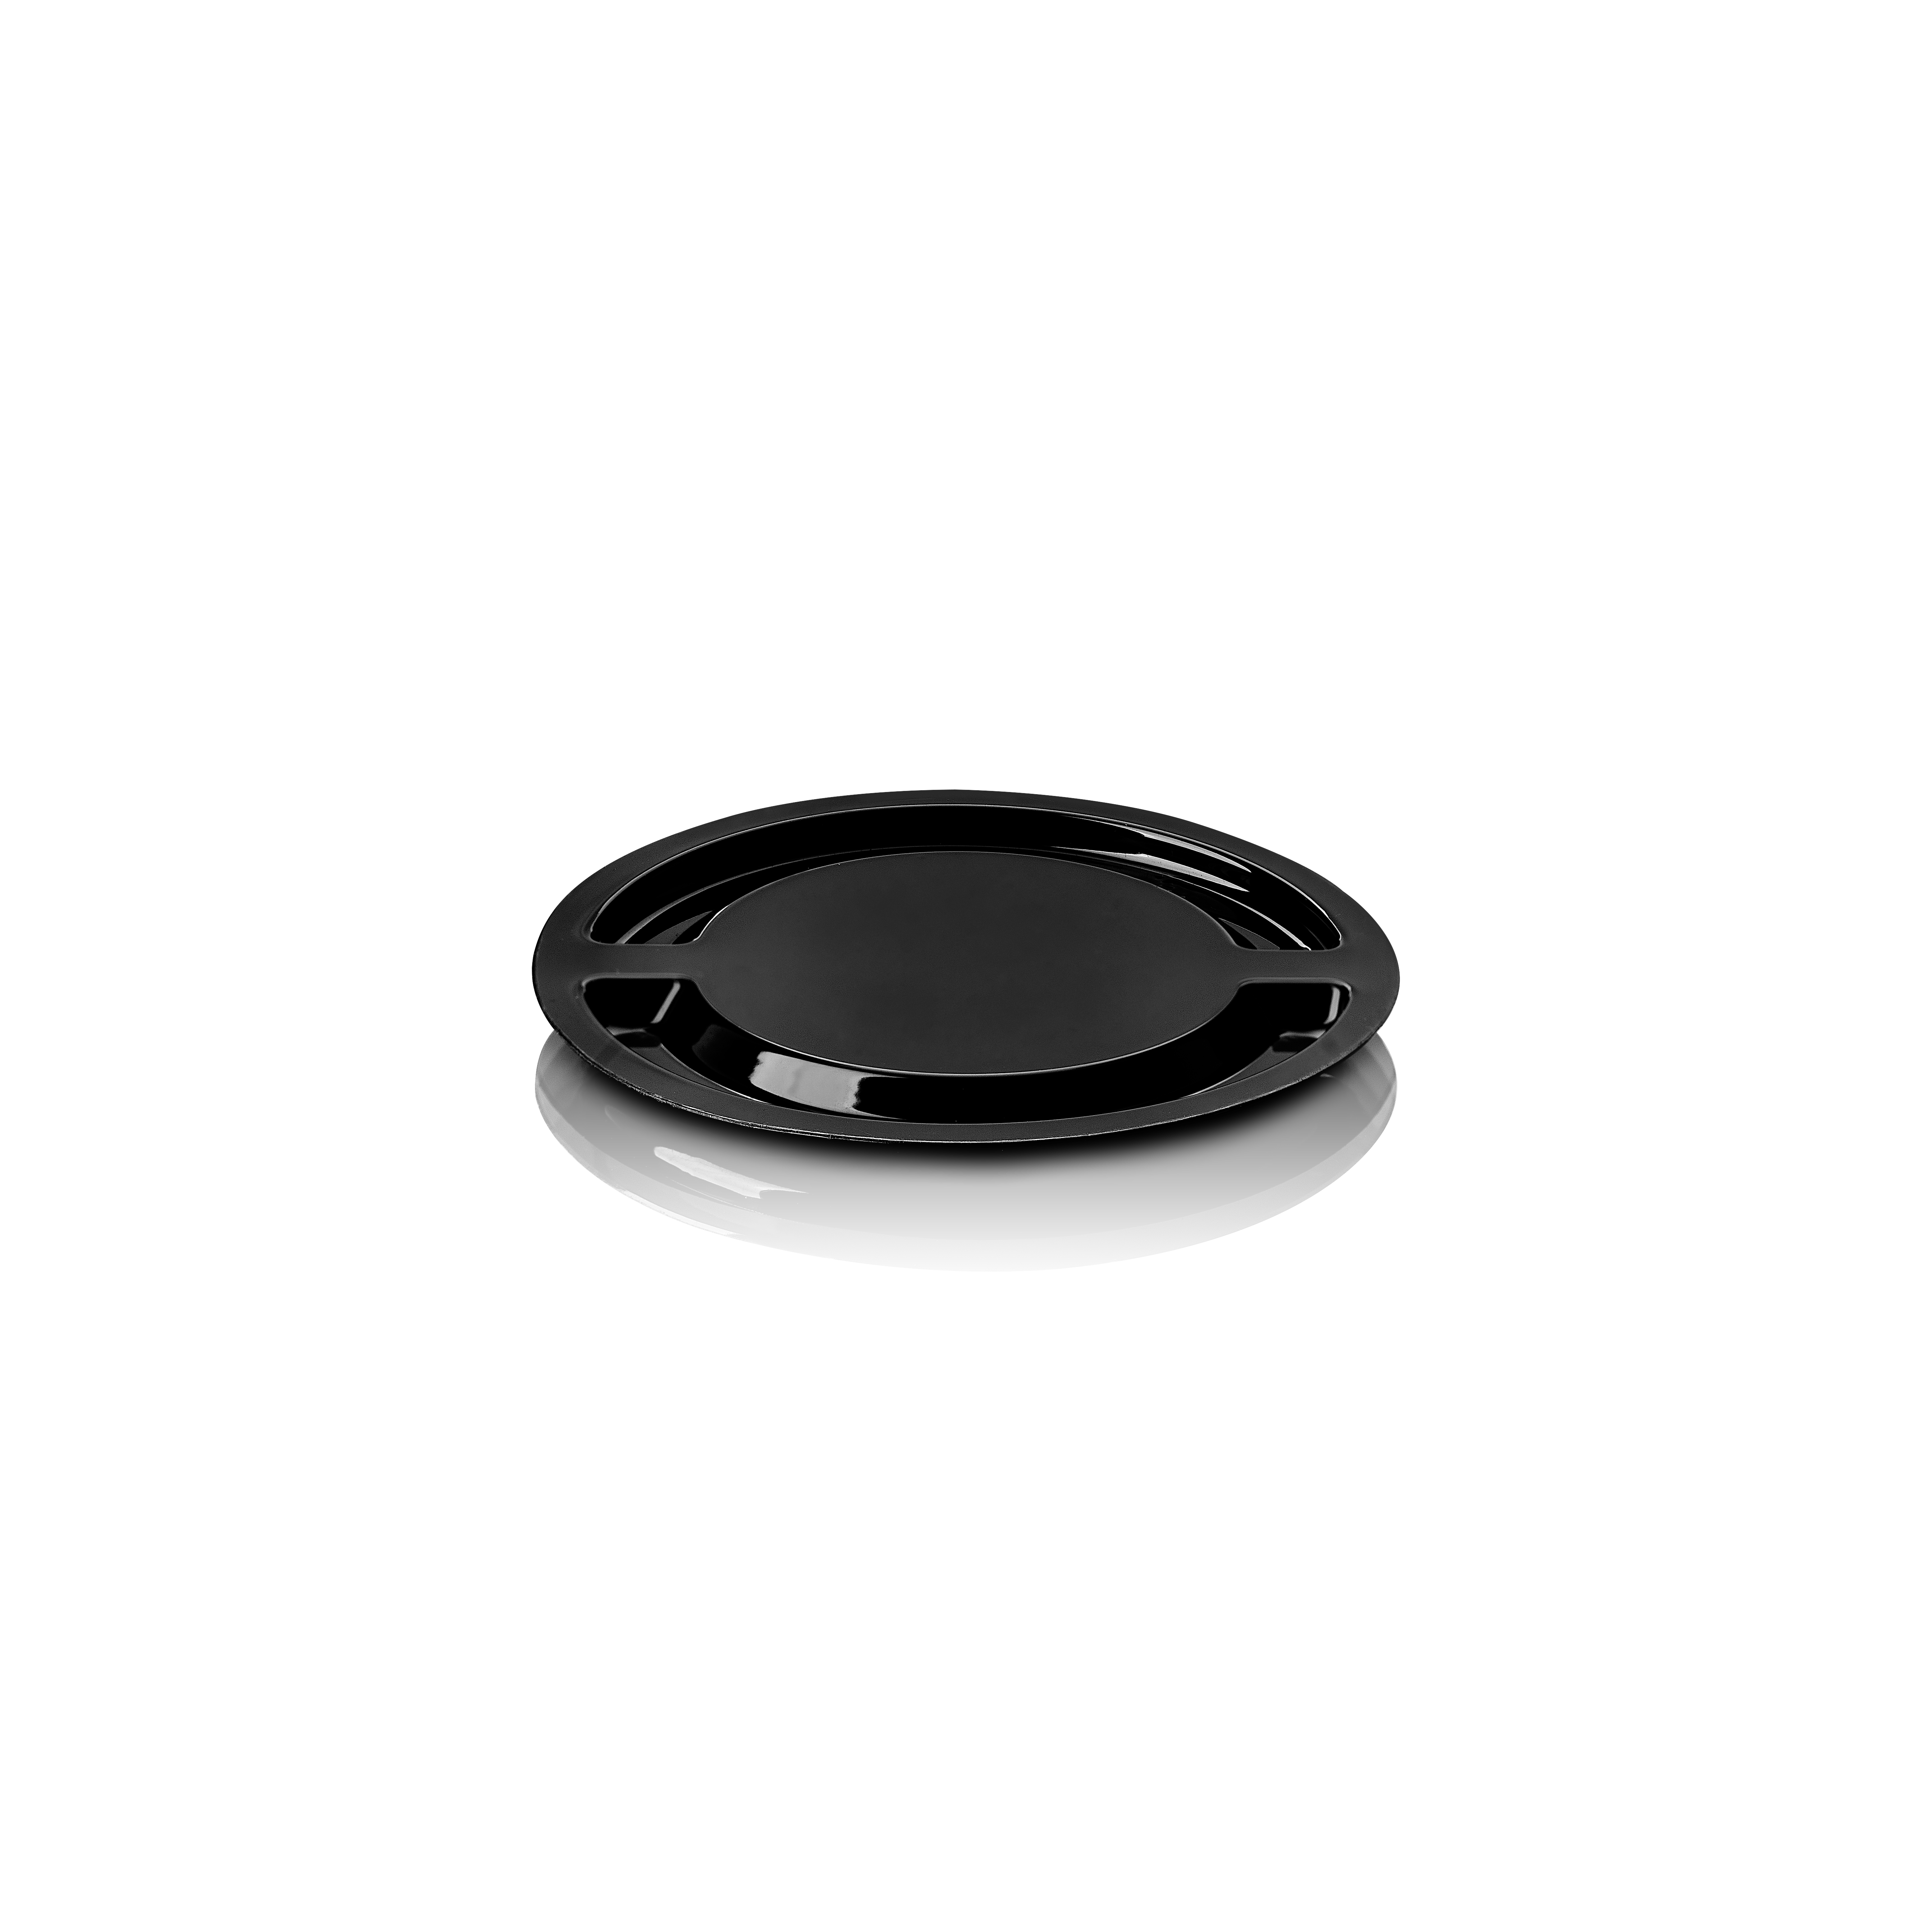 Disc liner Modern, A-Pet, black (Bryn 100)